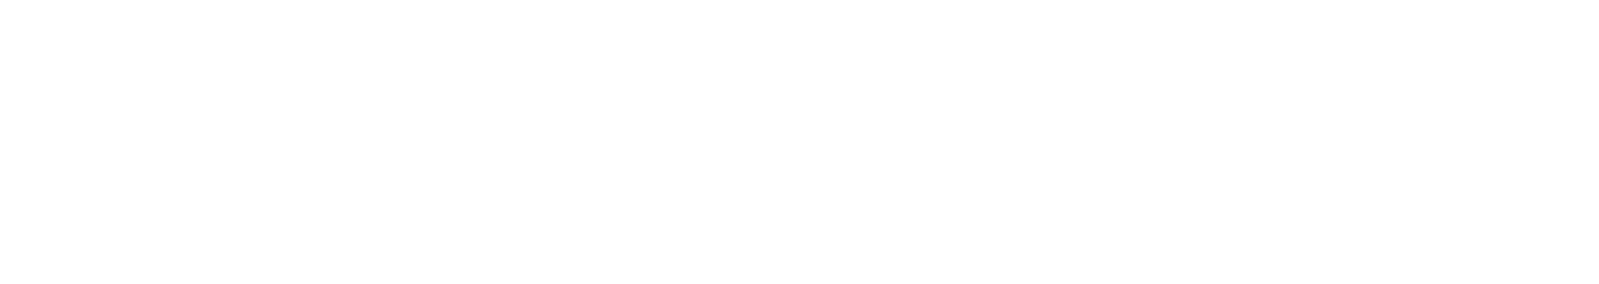 Kerry Logistics Network logo grand pour les fonds sombres (PNG transparent)